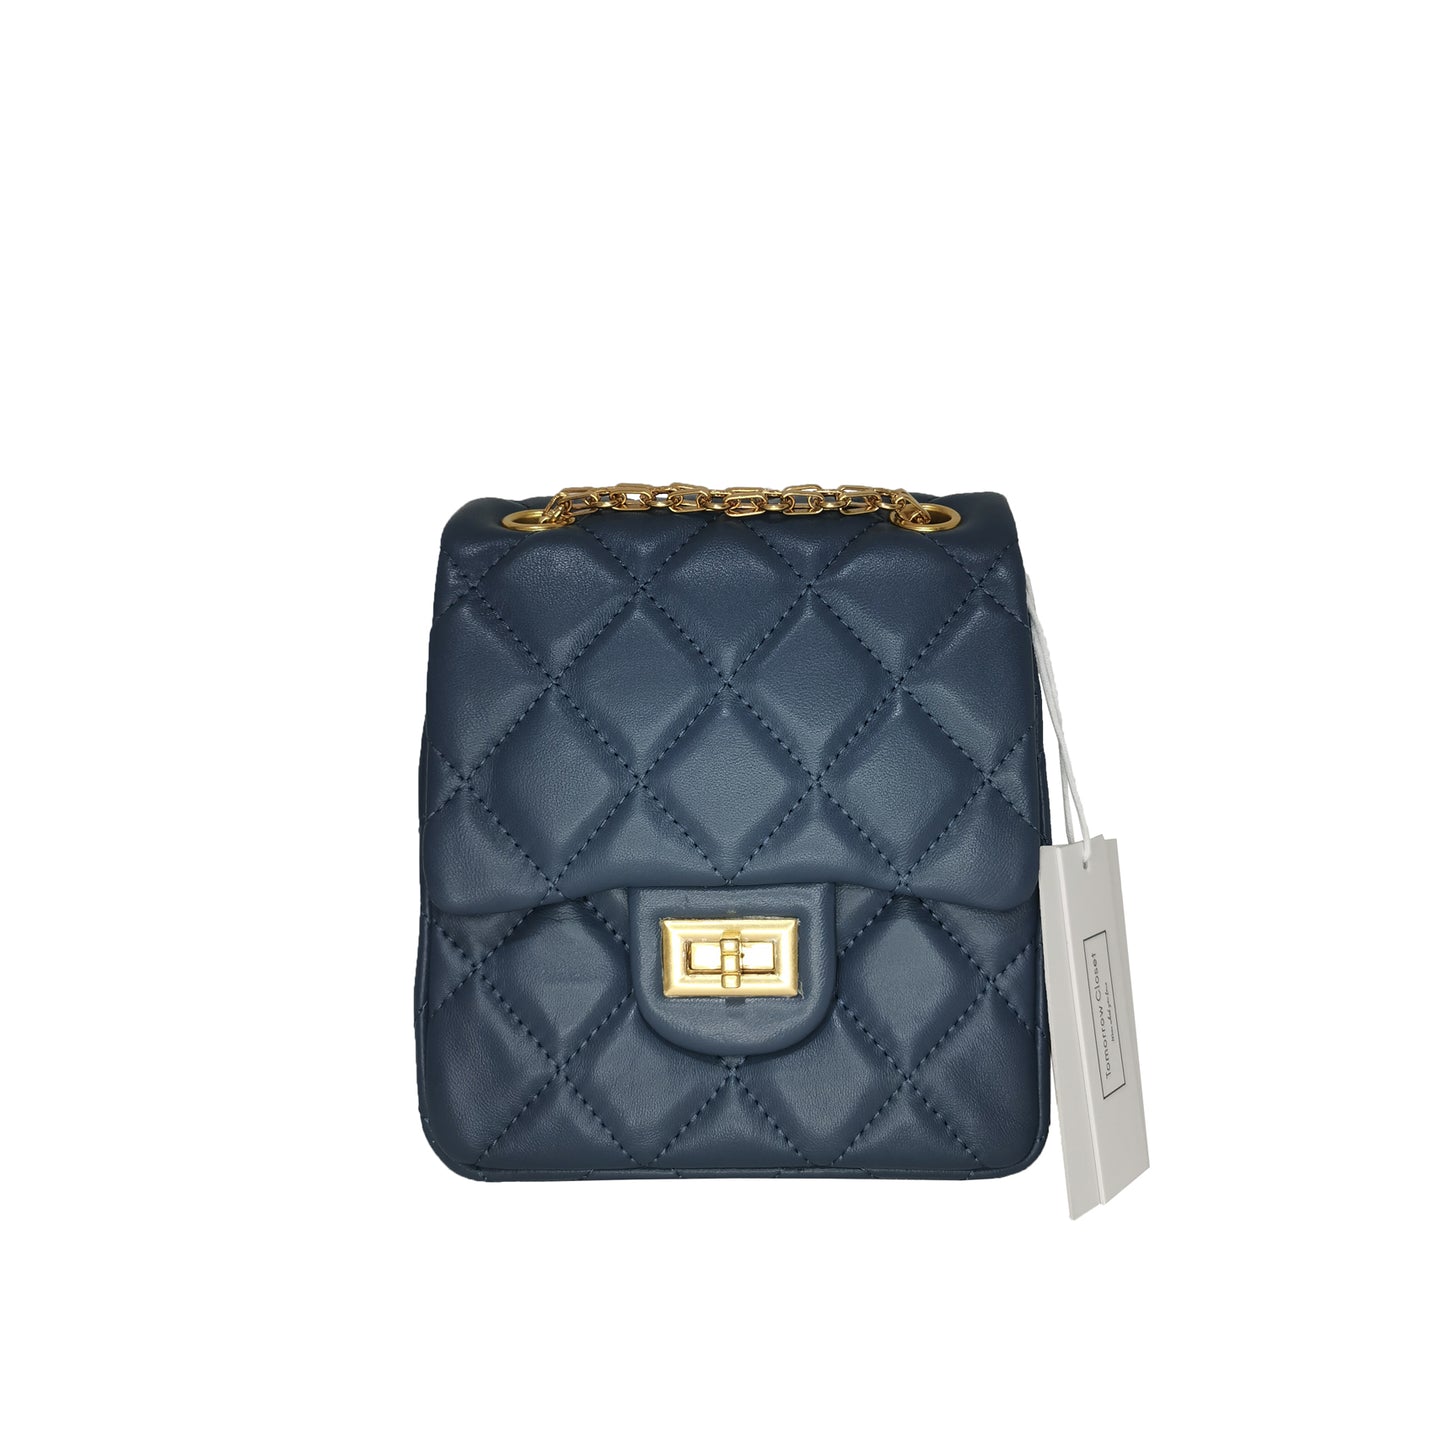 Women's genuine lambskin leather handbag Mirren Diamond design